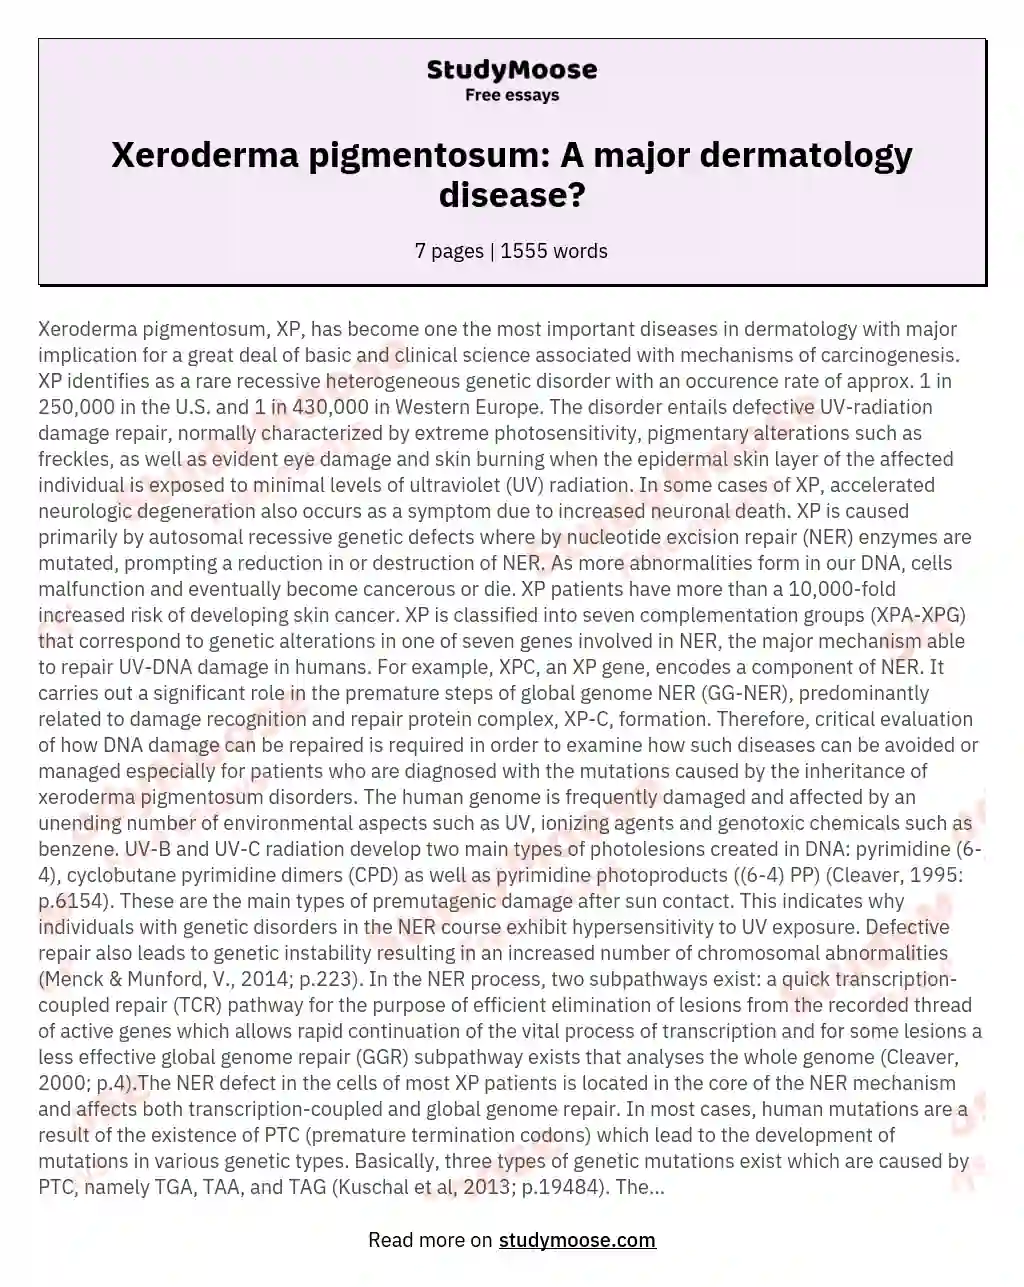 Xeroderma pigmentosum: A major dermatology disease? essay